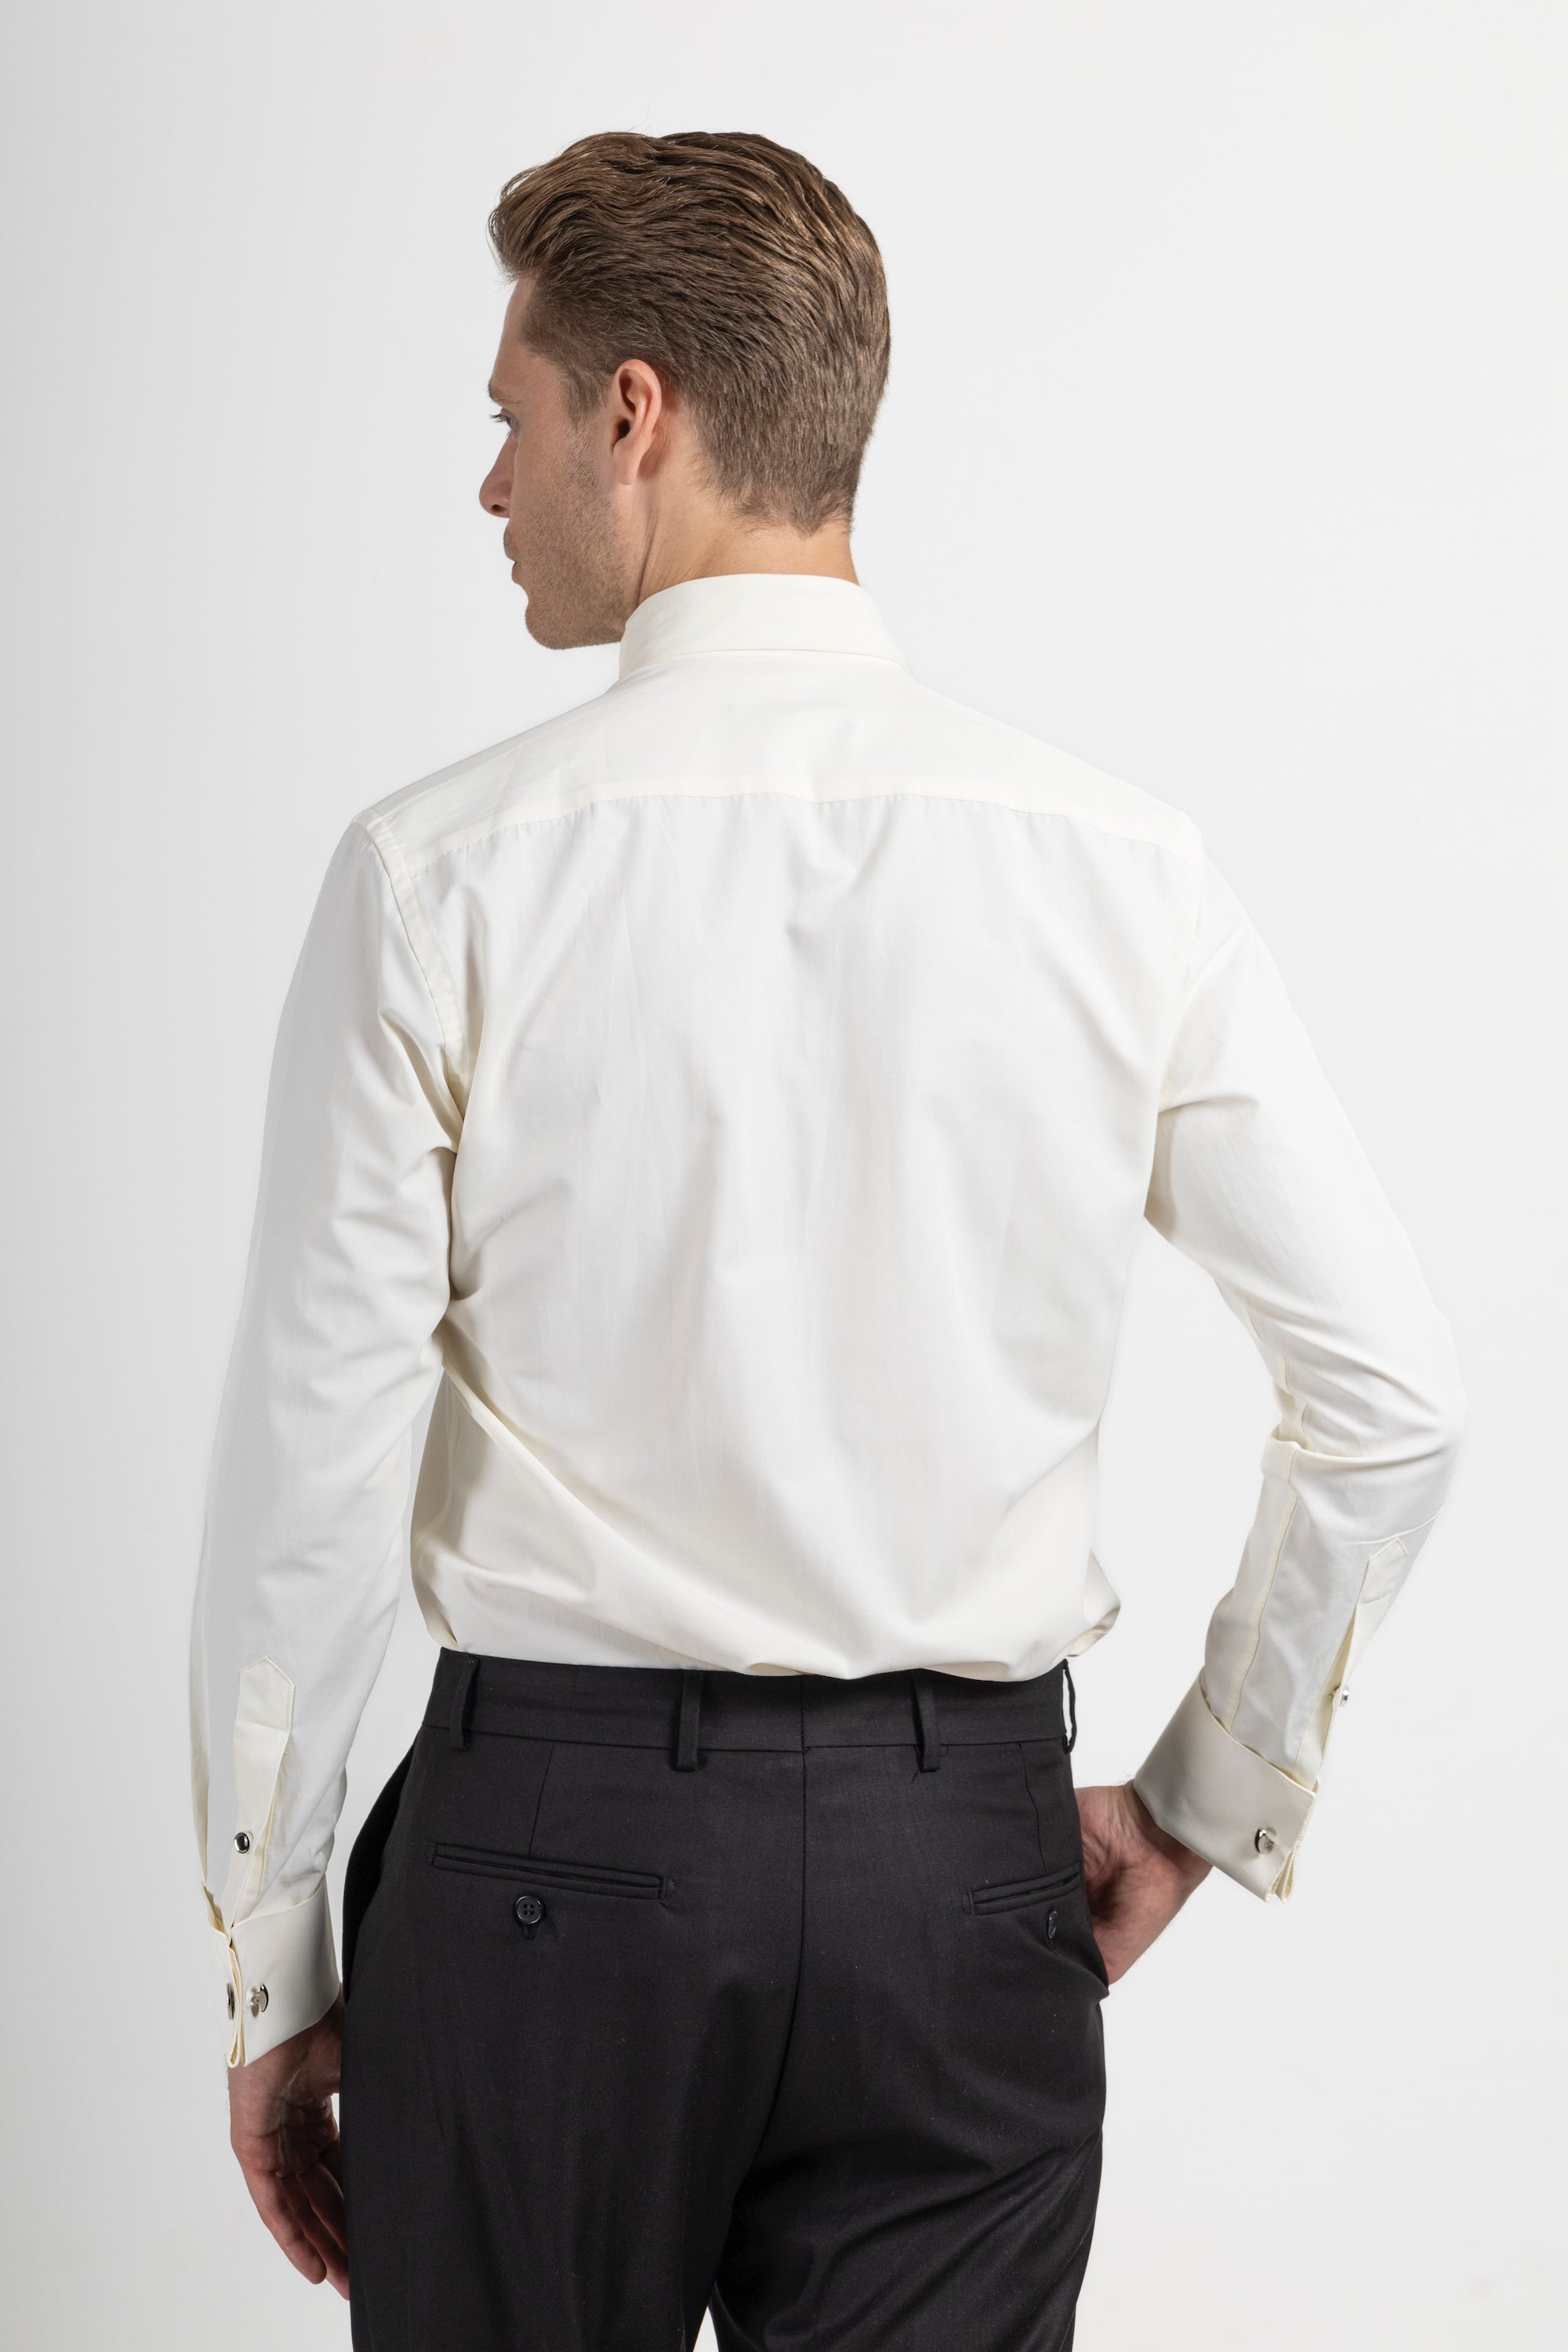 Off White Wing Collar Double Cuff Dress Shirt | Jack Martin